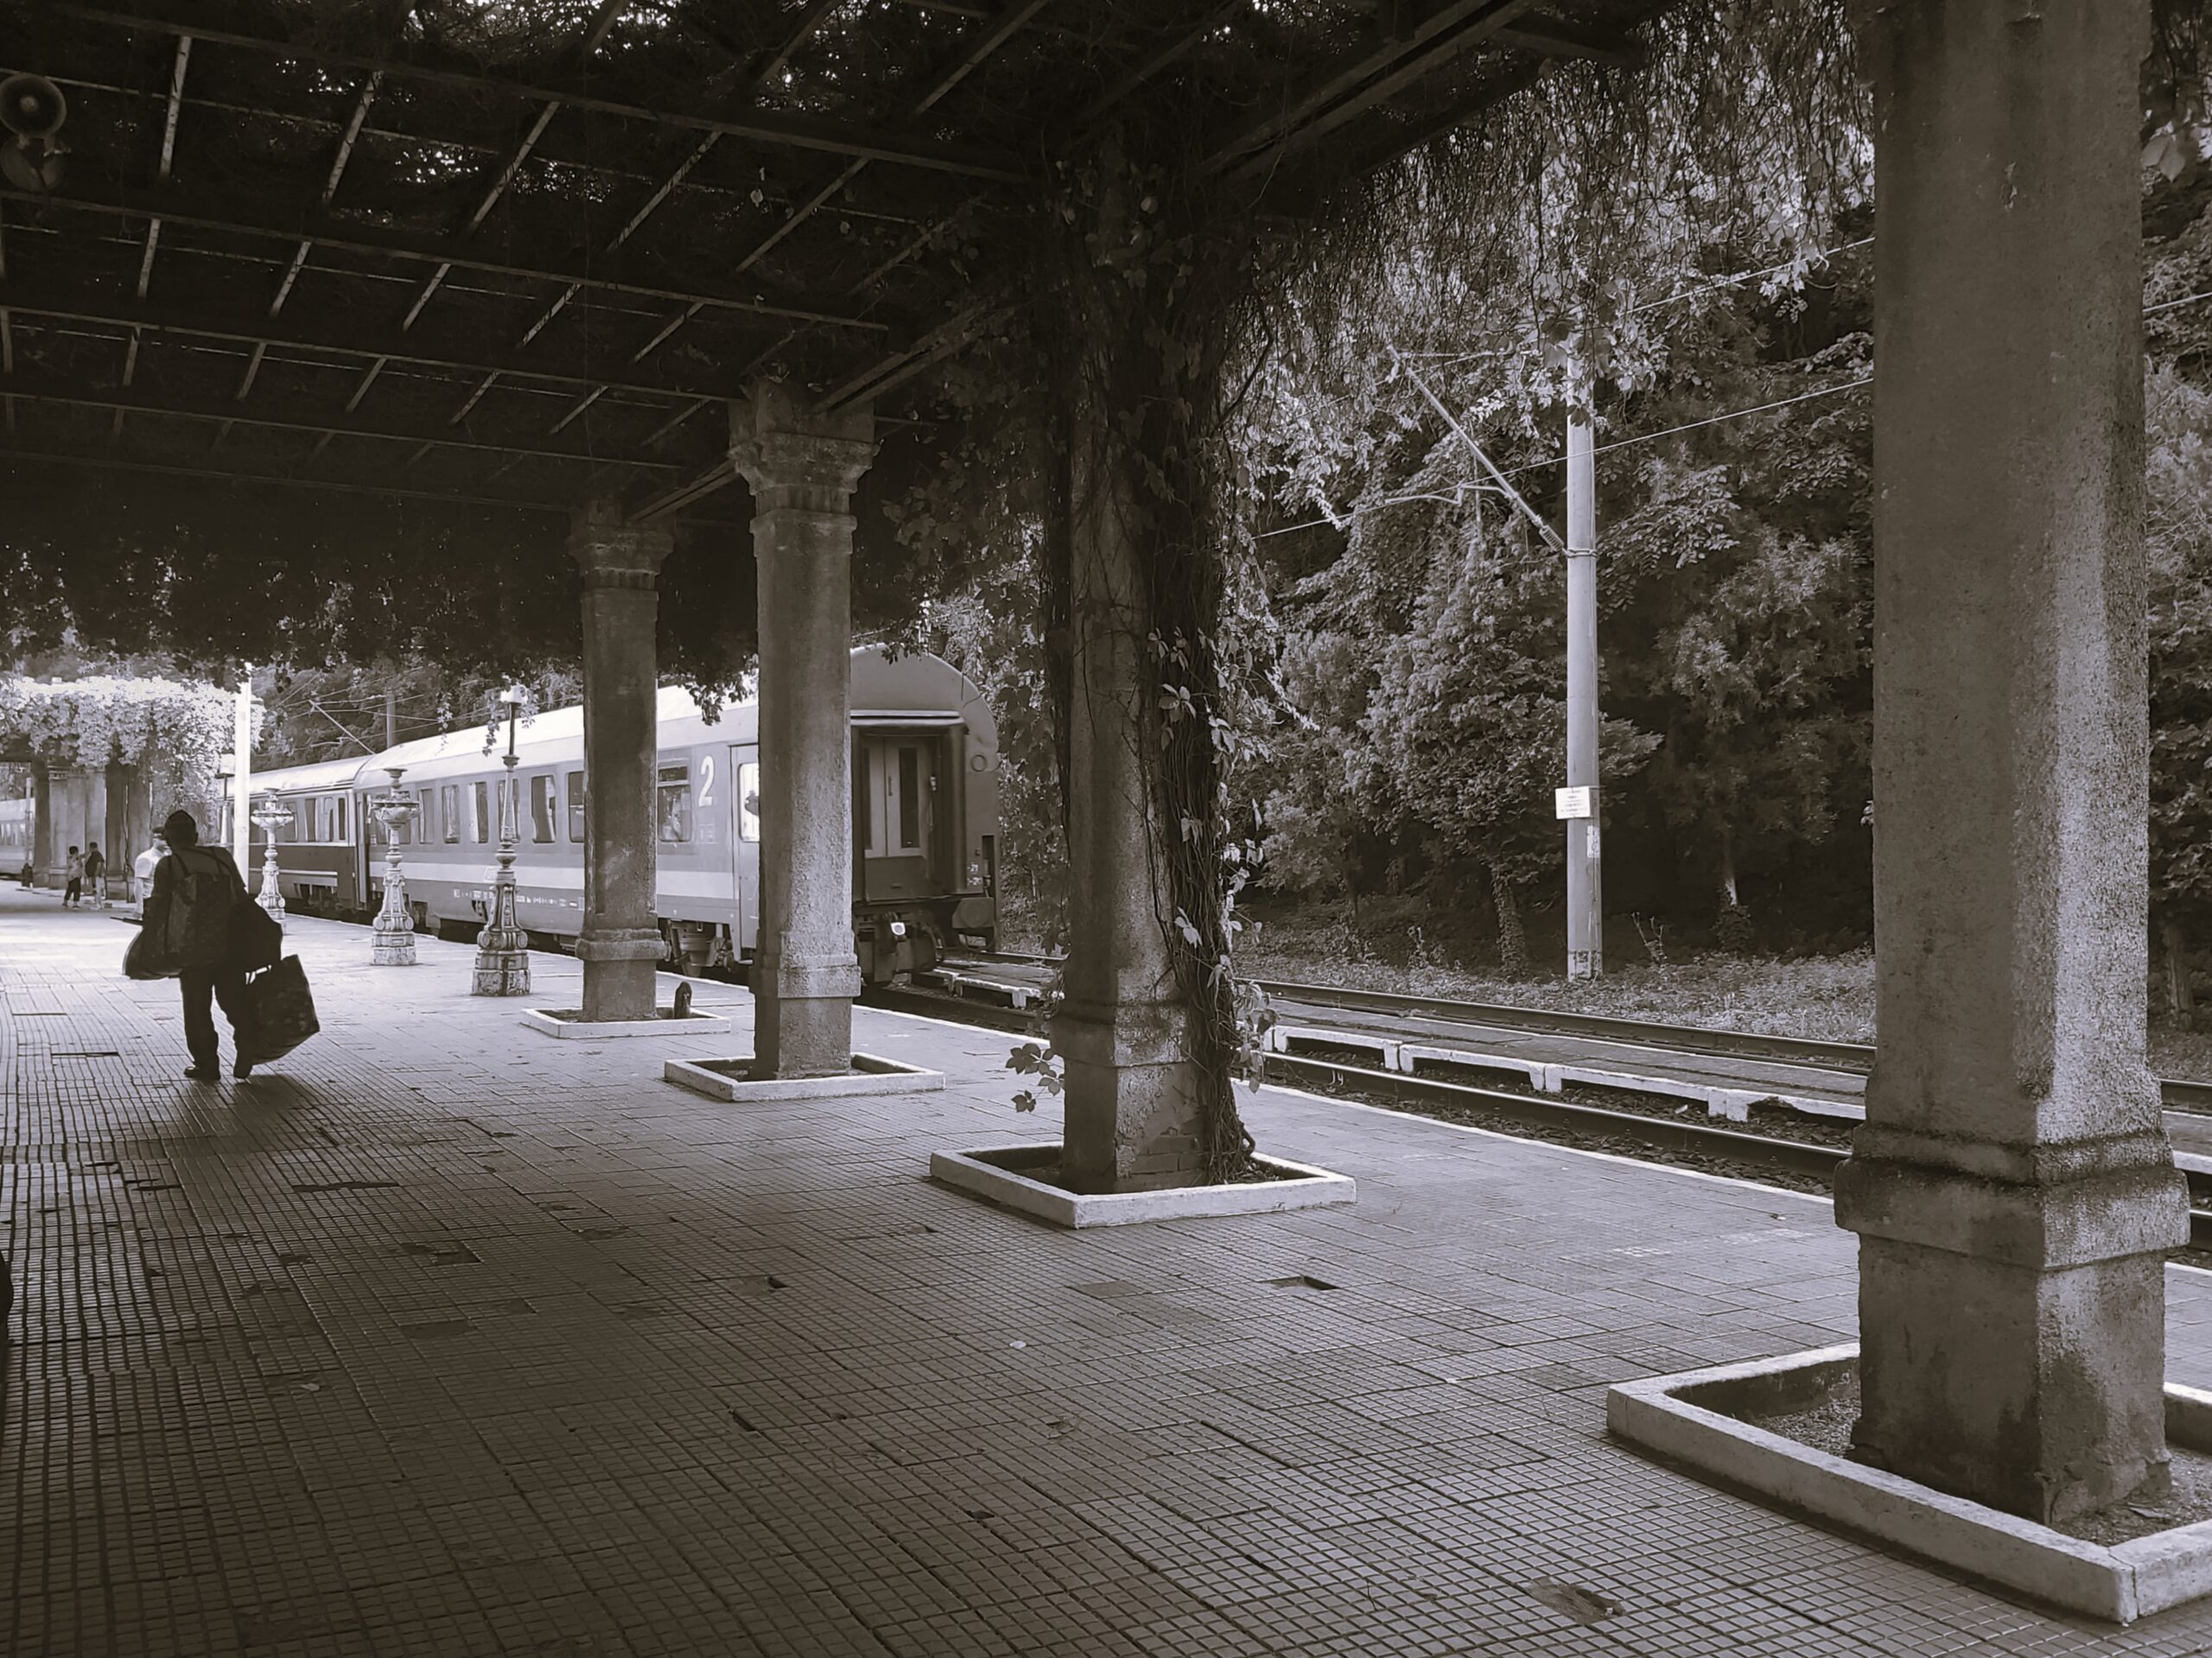 A black and white snapshot, an old man departs, carrying his bag along the platform at Baile Herculane train station, Romania.